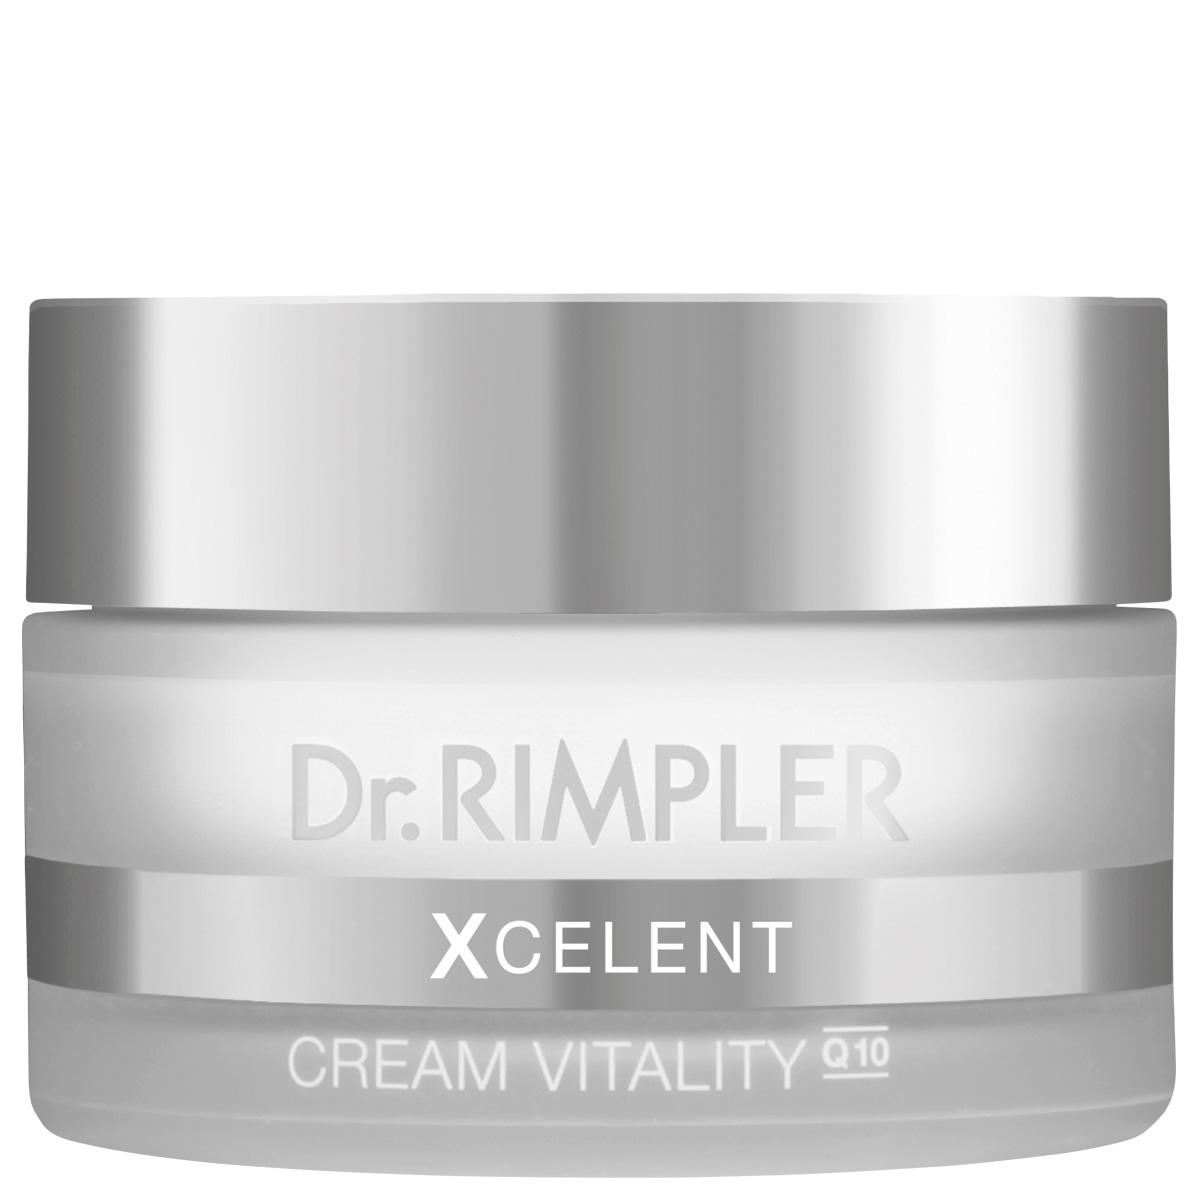 Dr. RIMPLER XCELENT Cream Vitality Q10 50 ml - 1